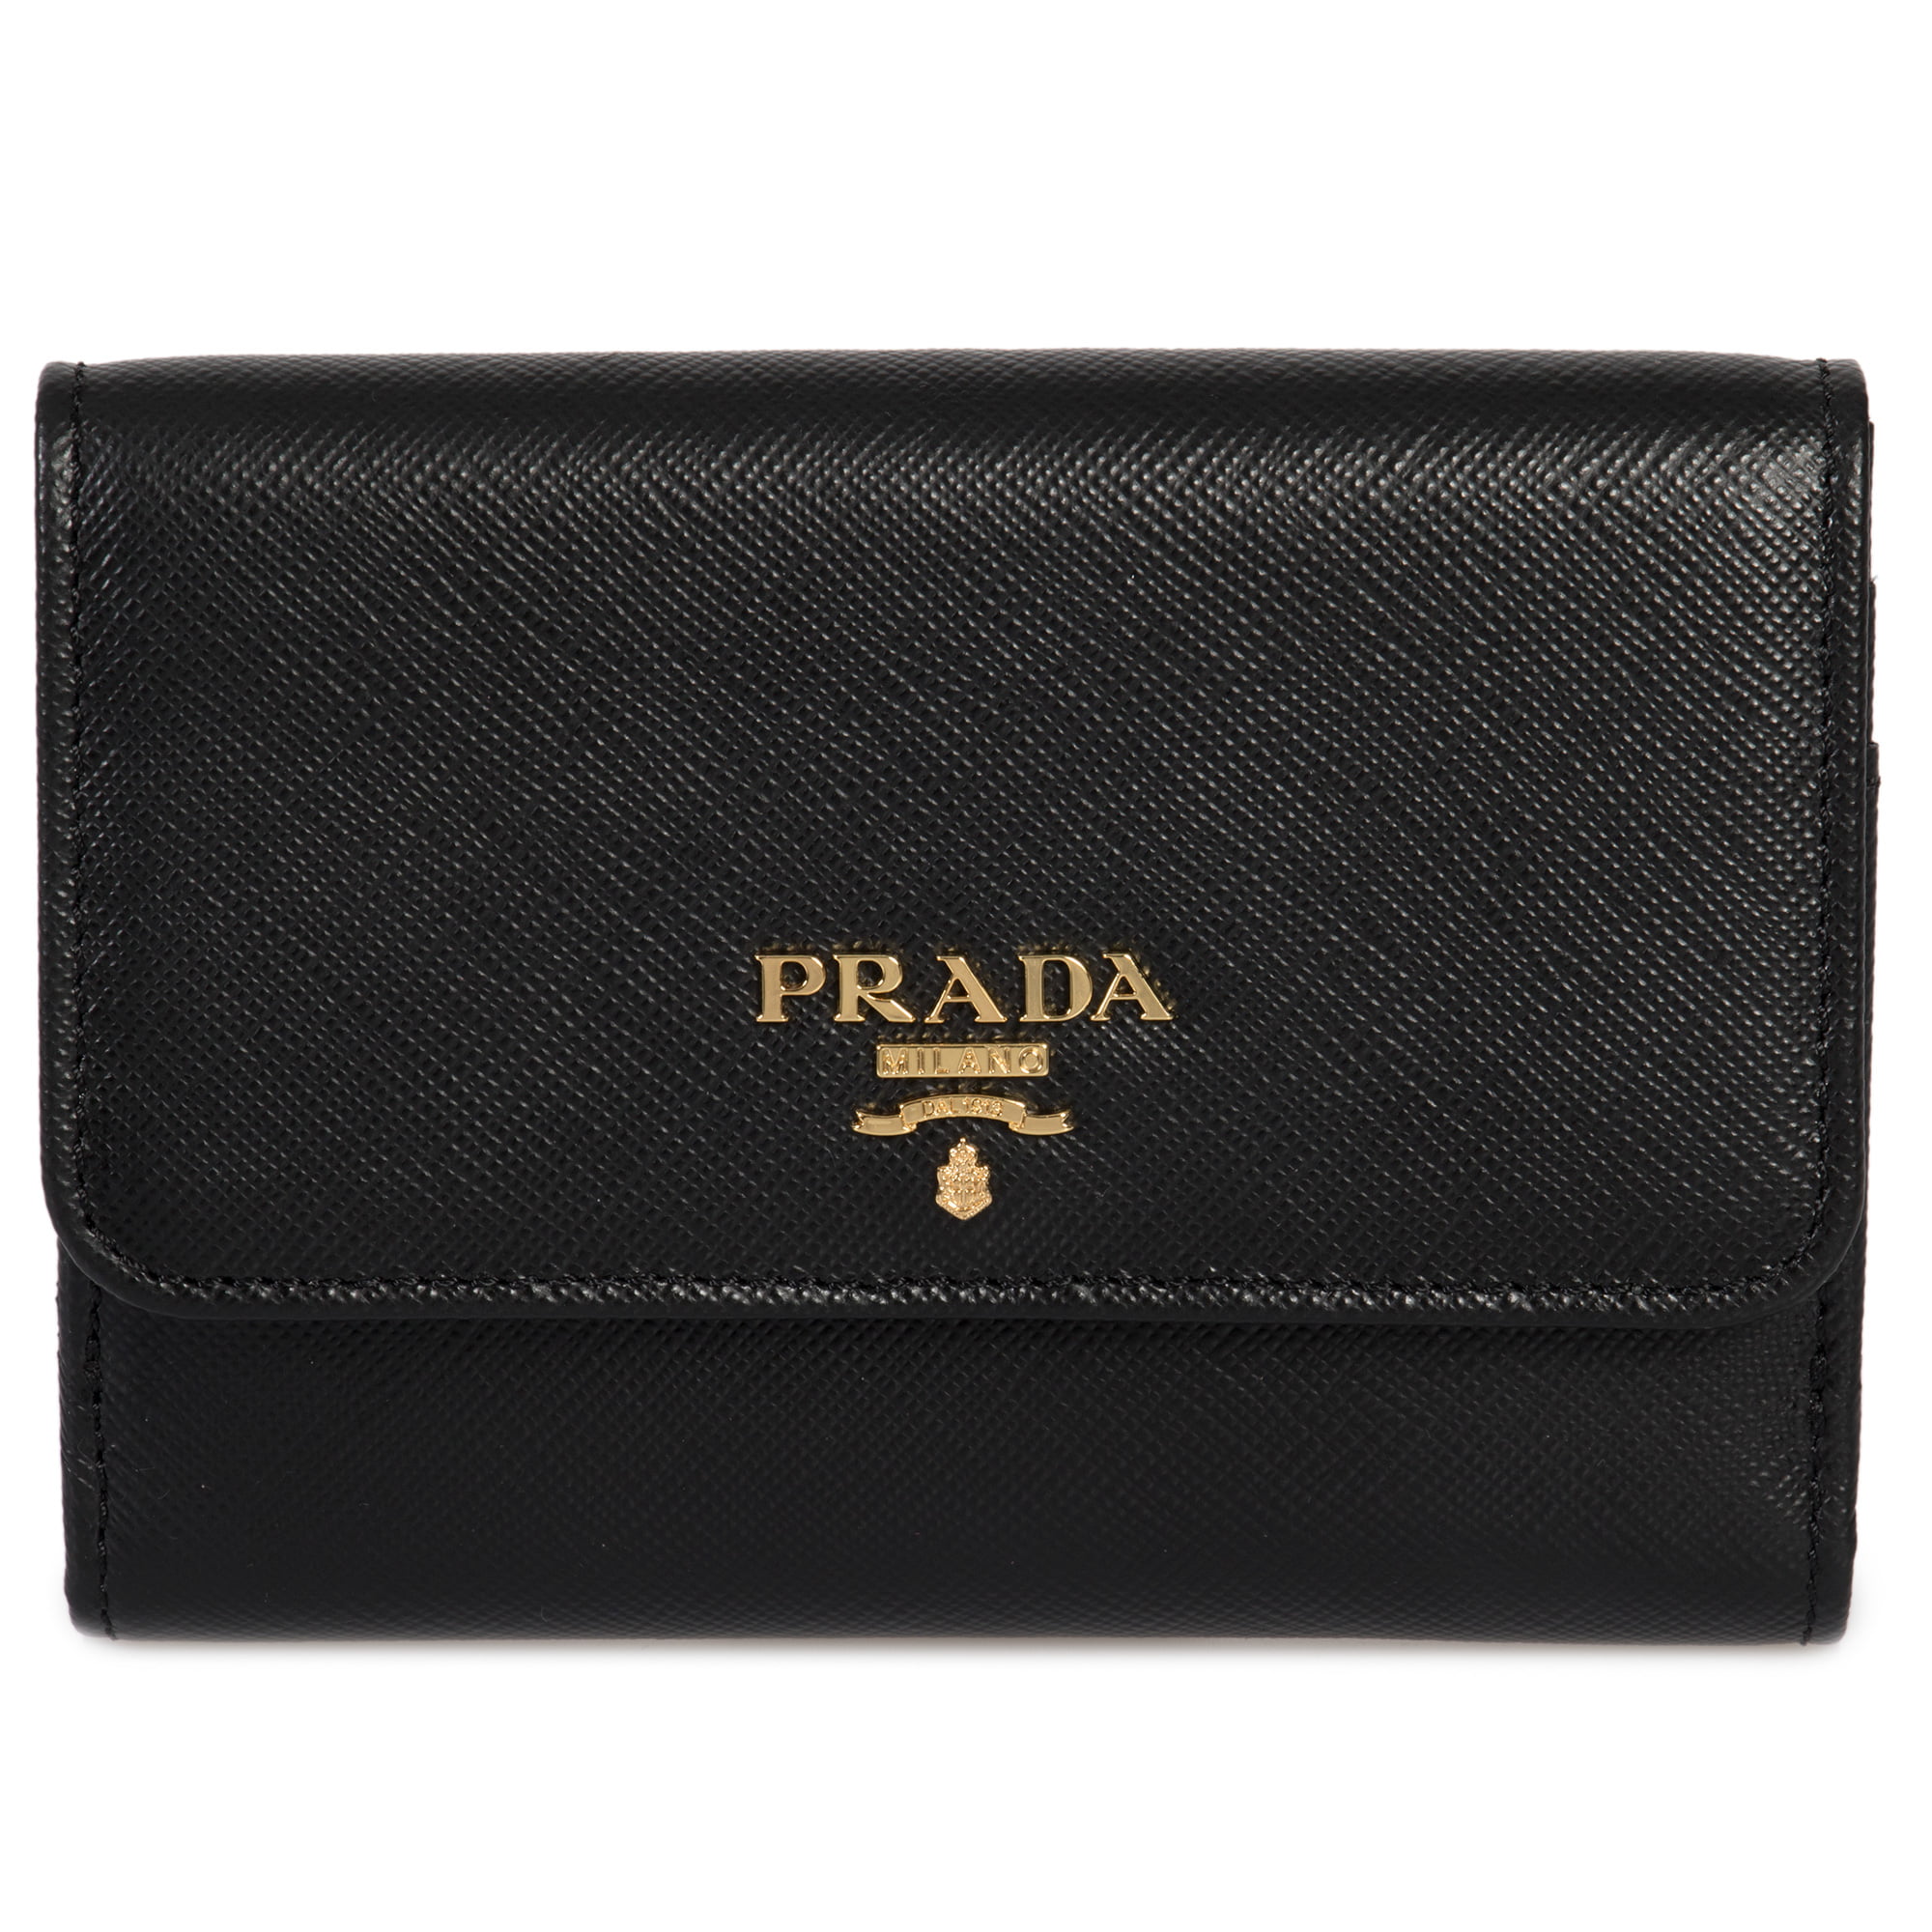 prada wallet for ladies